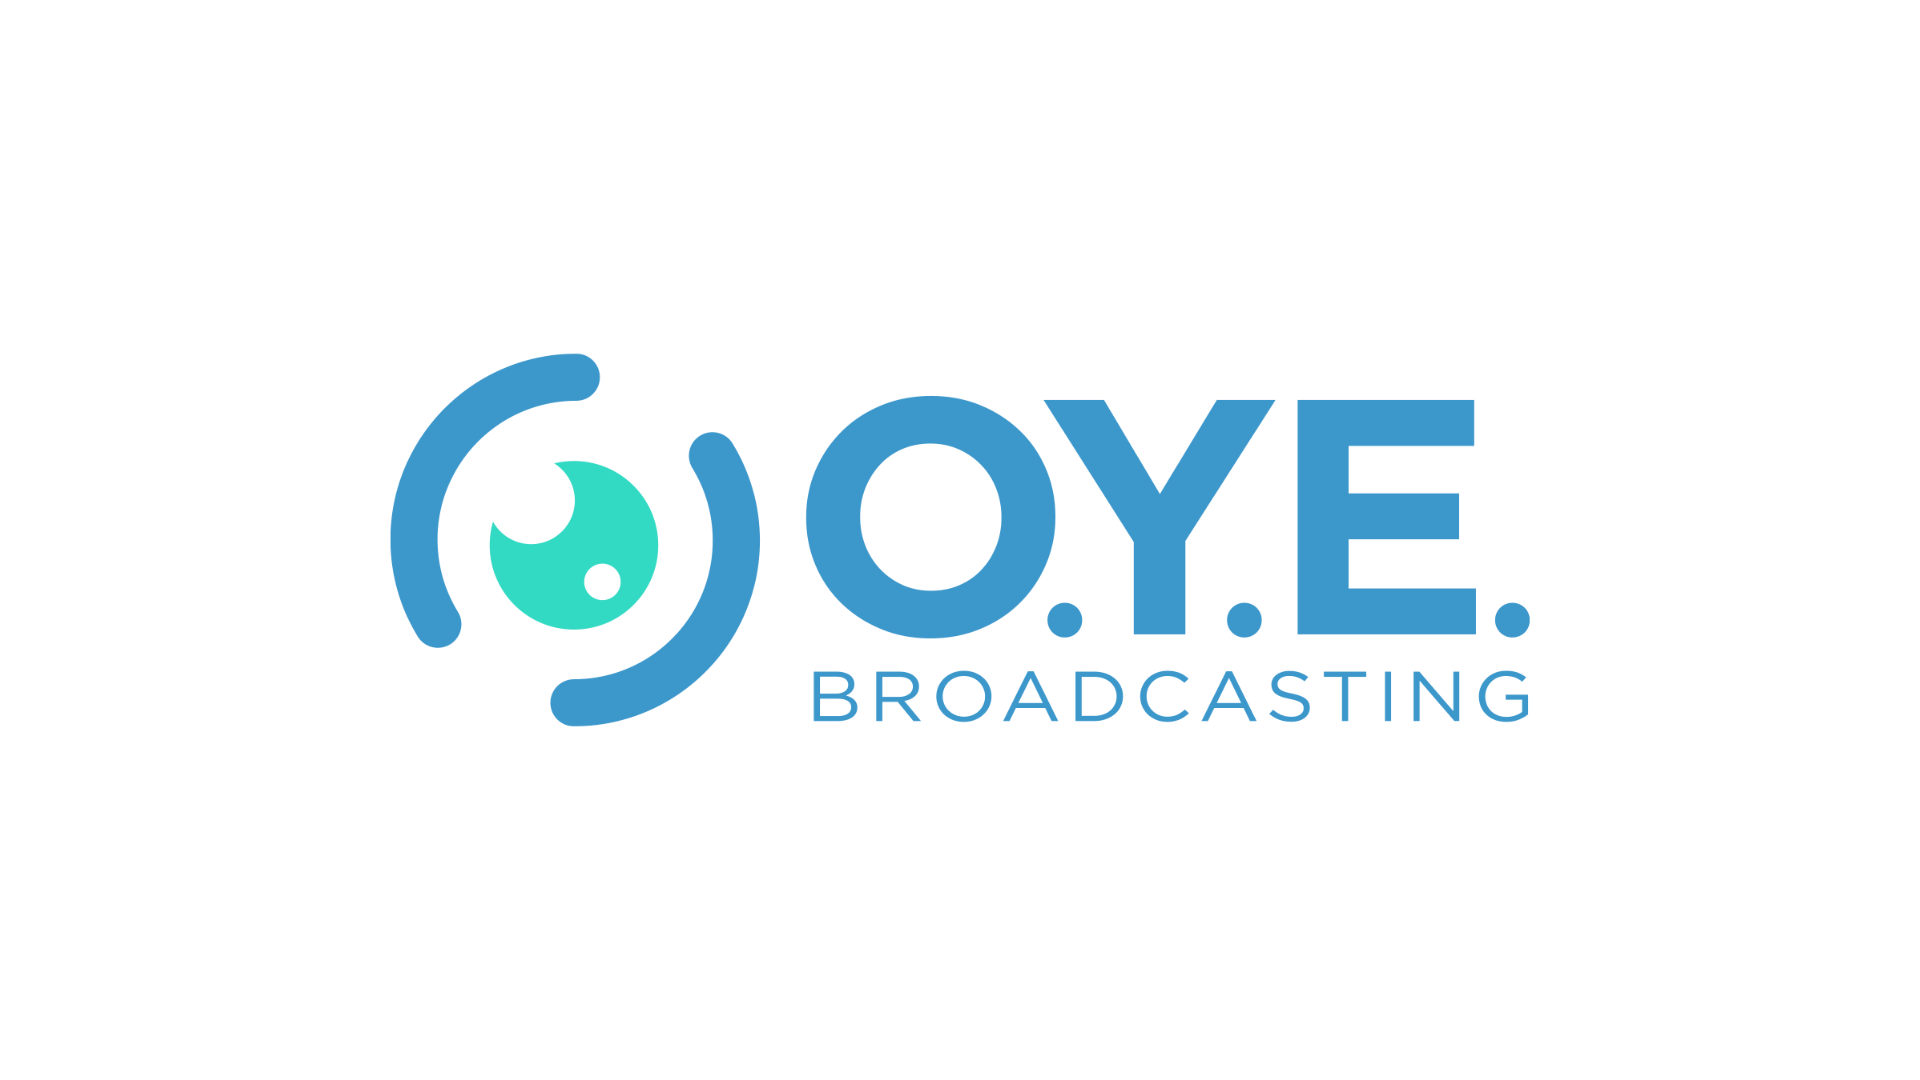 OpenYour Eyes Broadcasting kicks off